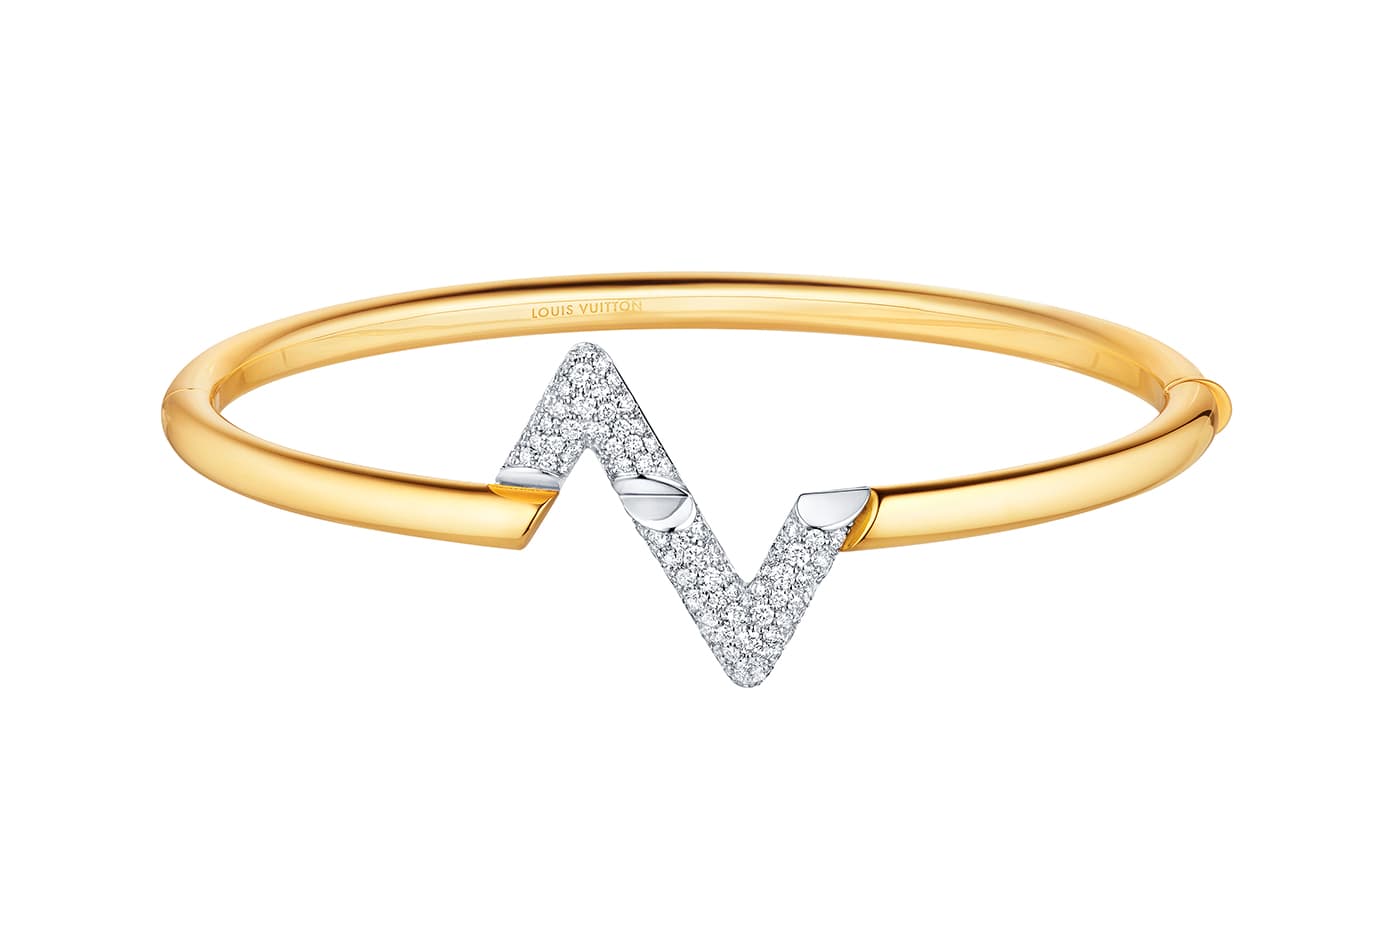 LV Volt Upside Down Chain Bracelet, White Gold And Diamonds